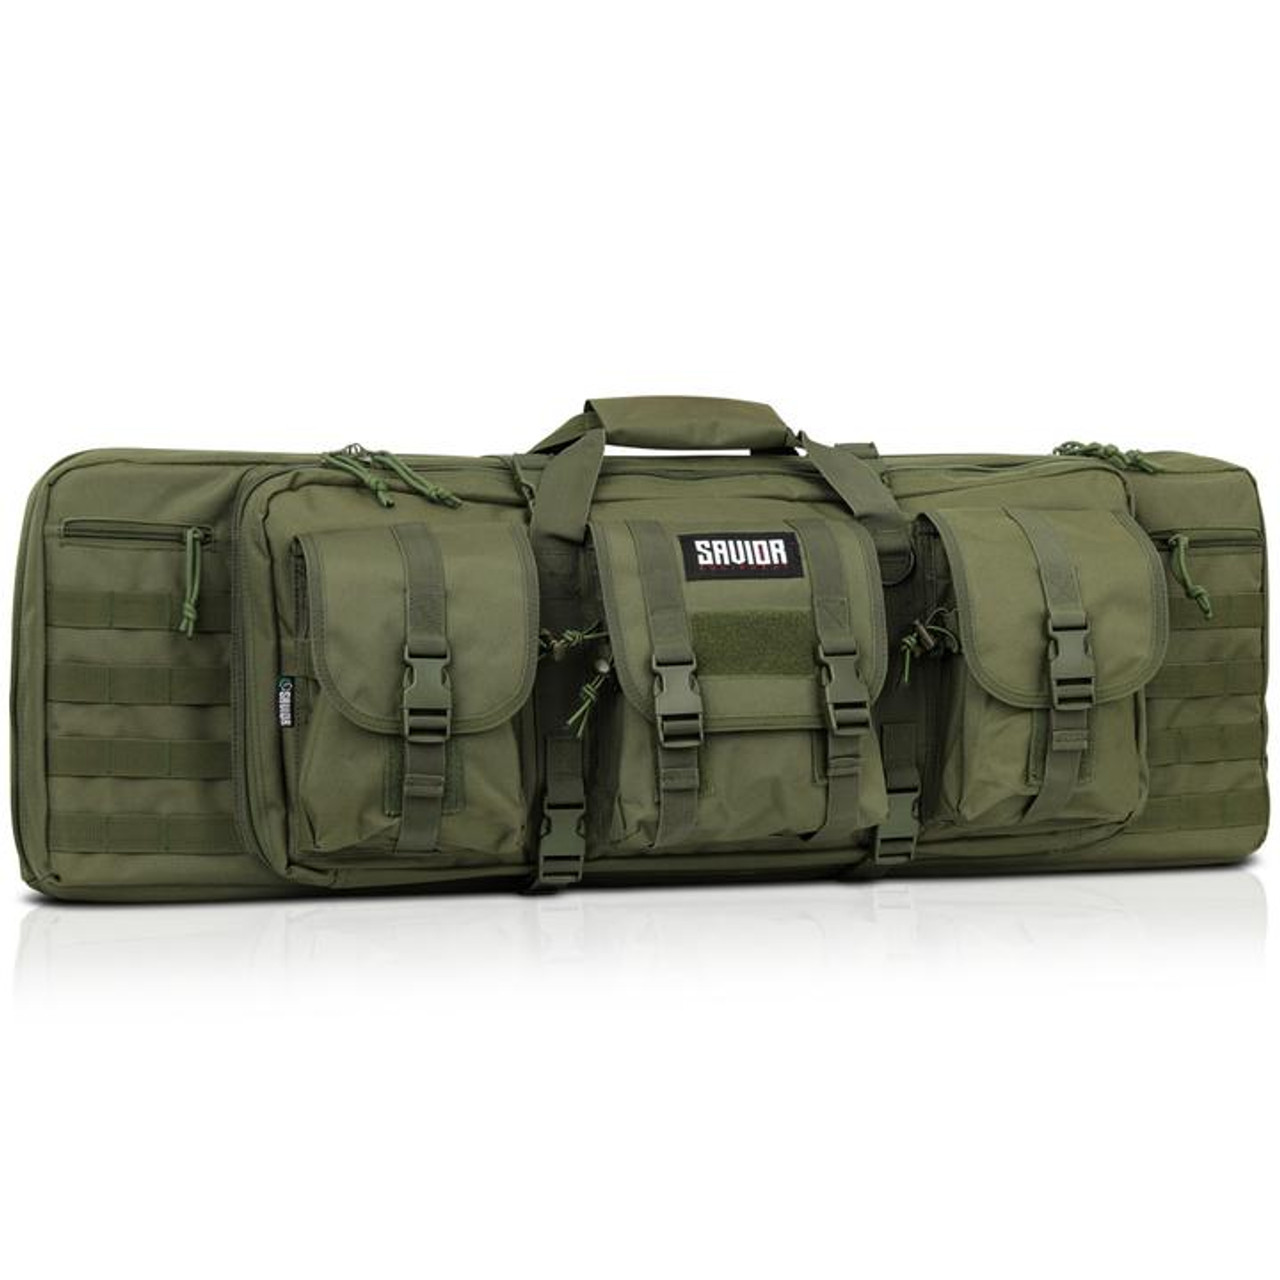 BattleBag, Double Rifle Bag, 36 & 42 Gun Case